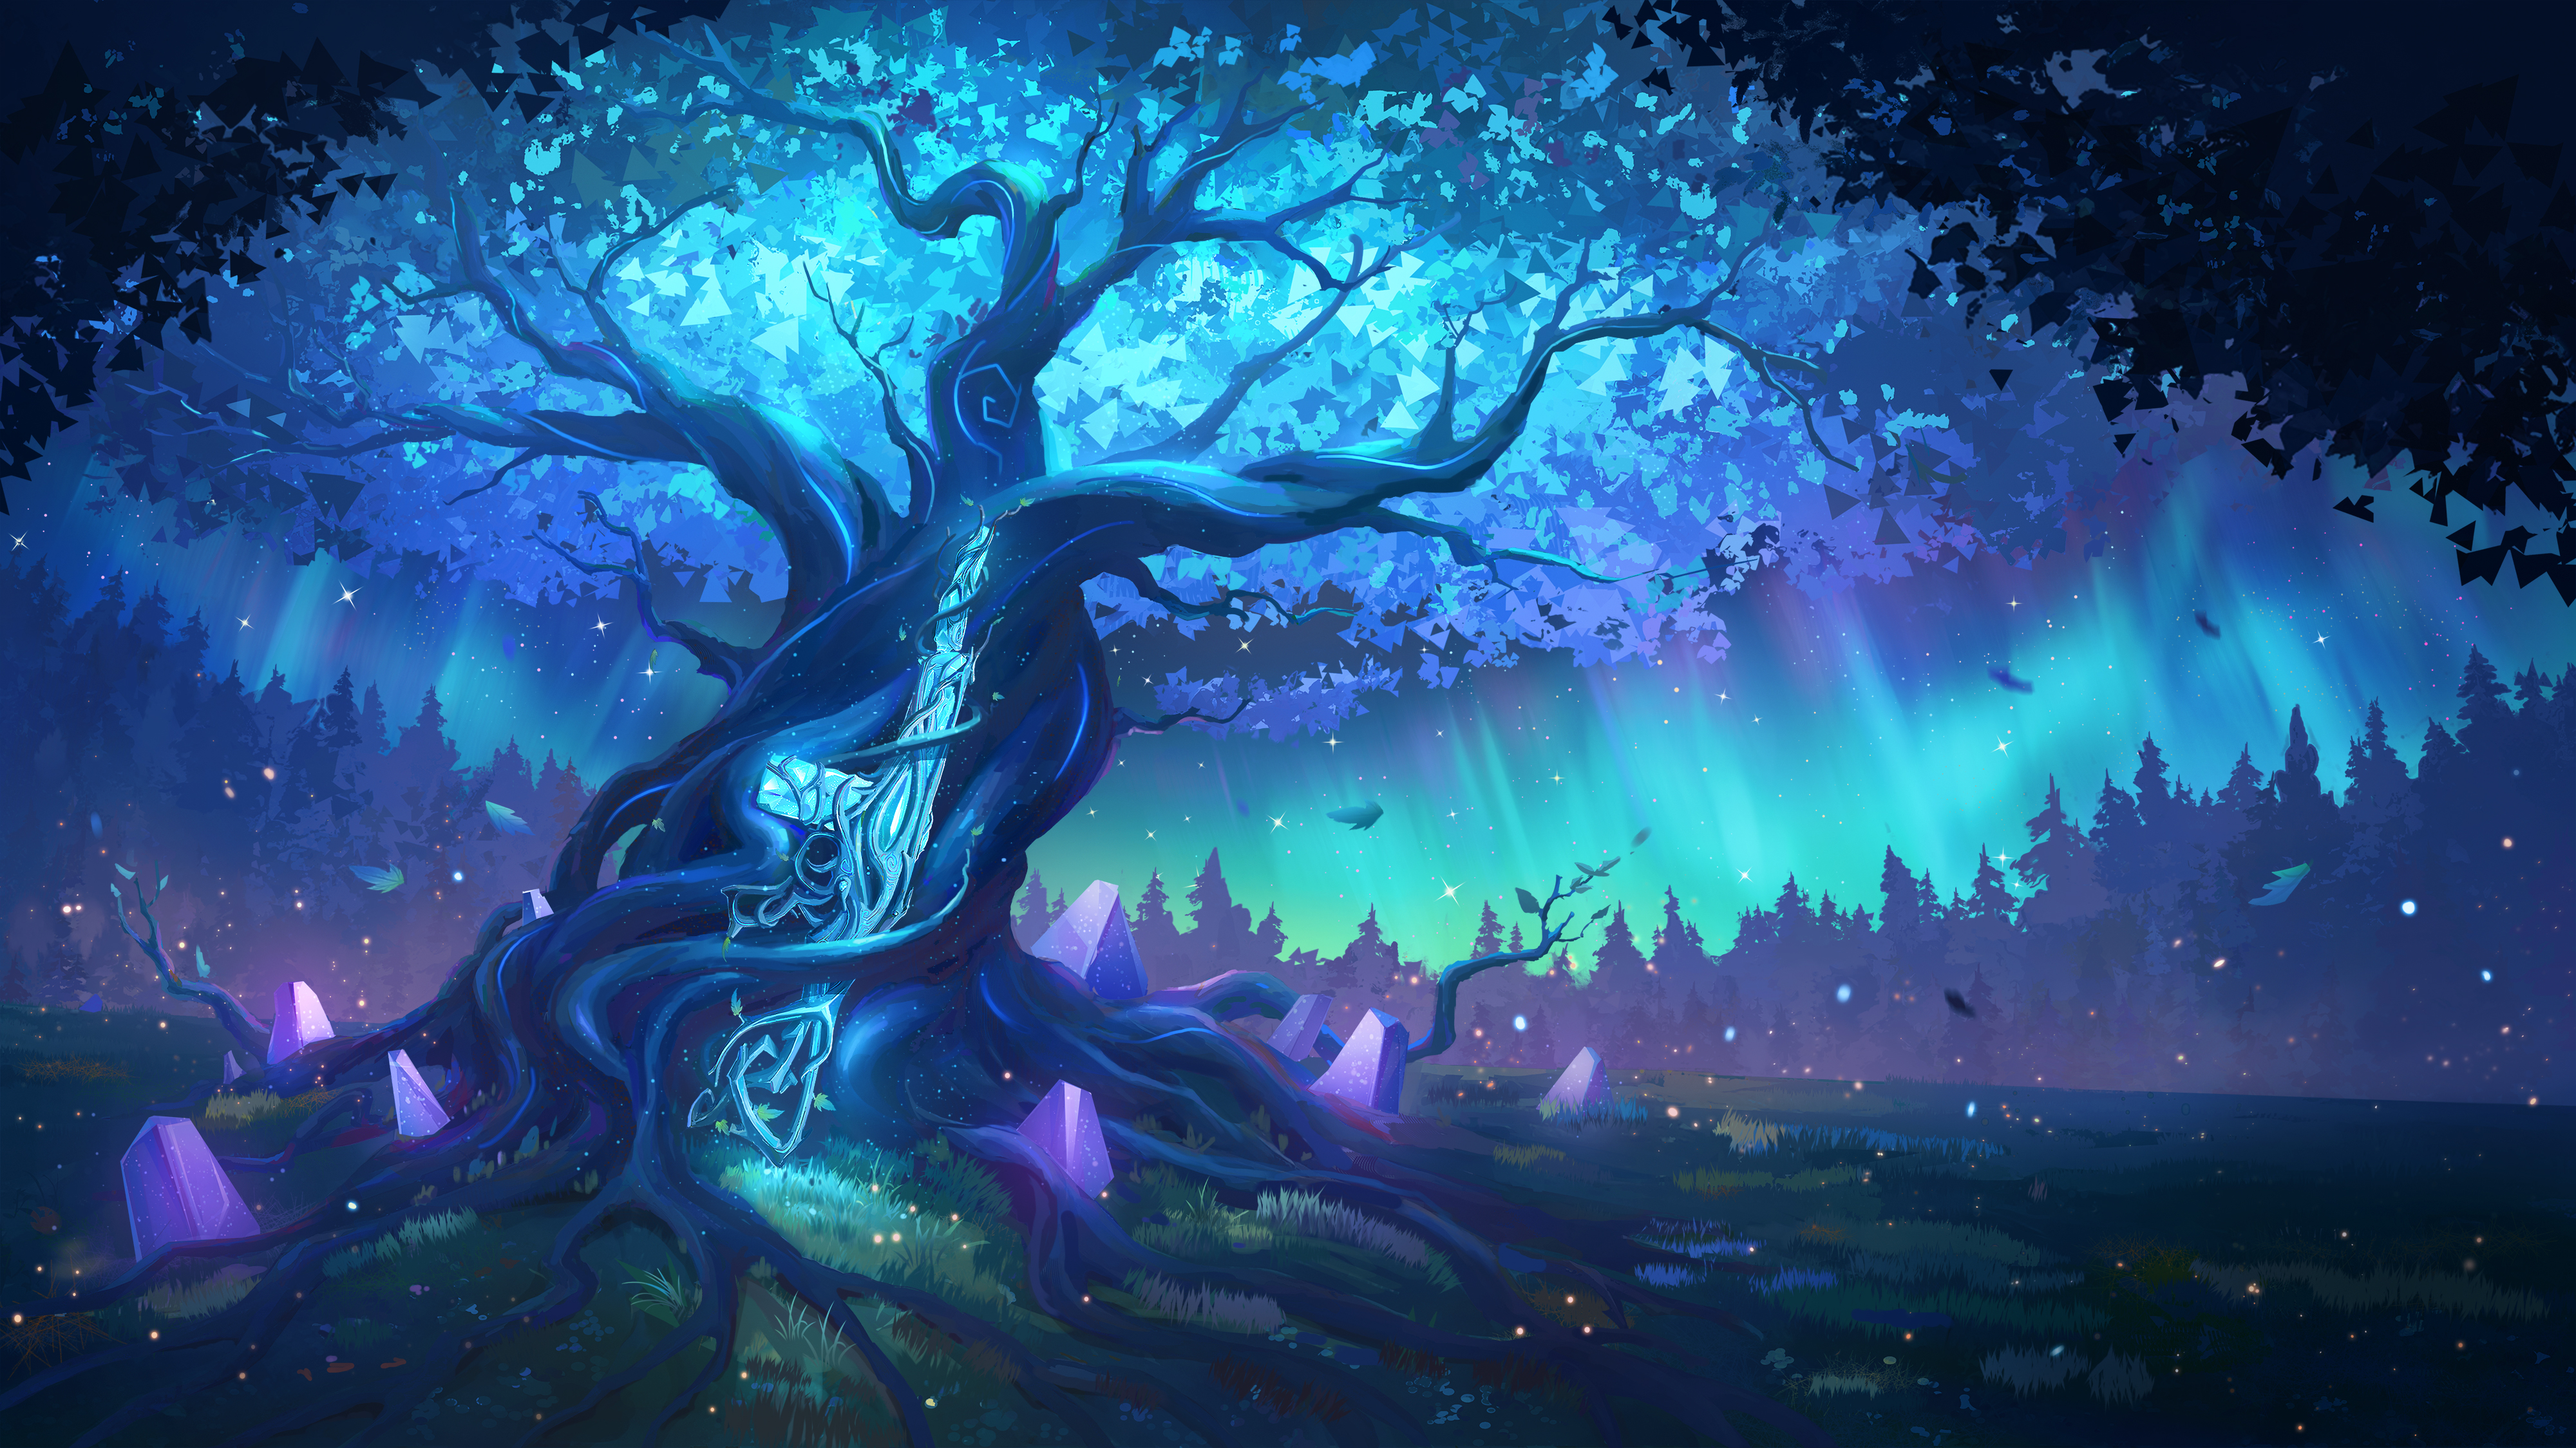 John Stone Digital Art Artwork Illustration Digital Painting Landscape Trees Forest Rifles Gun Night 4000x2249